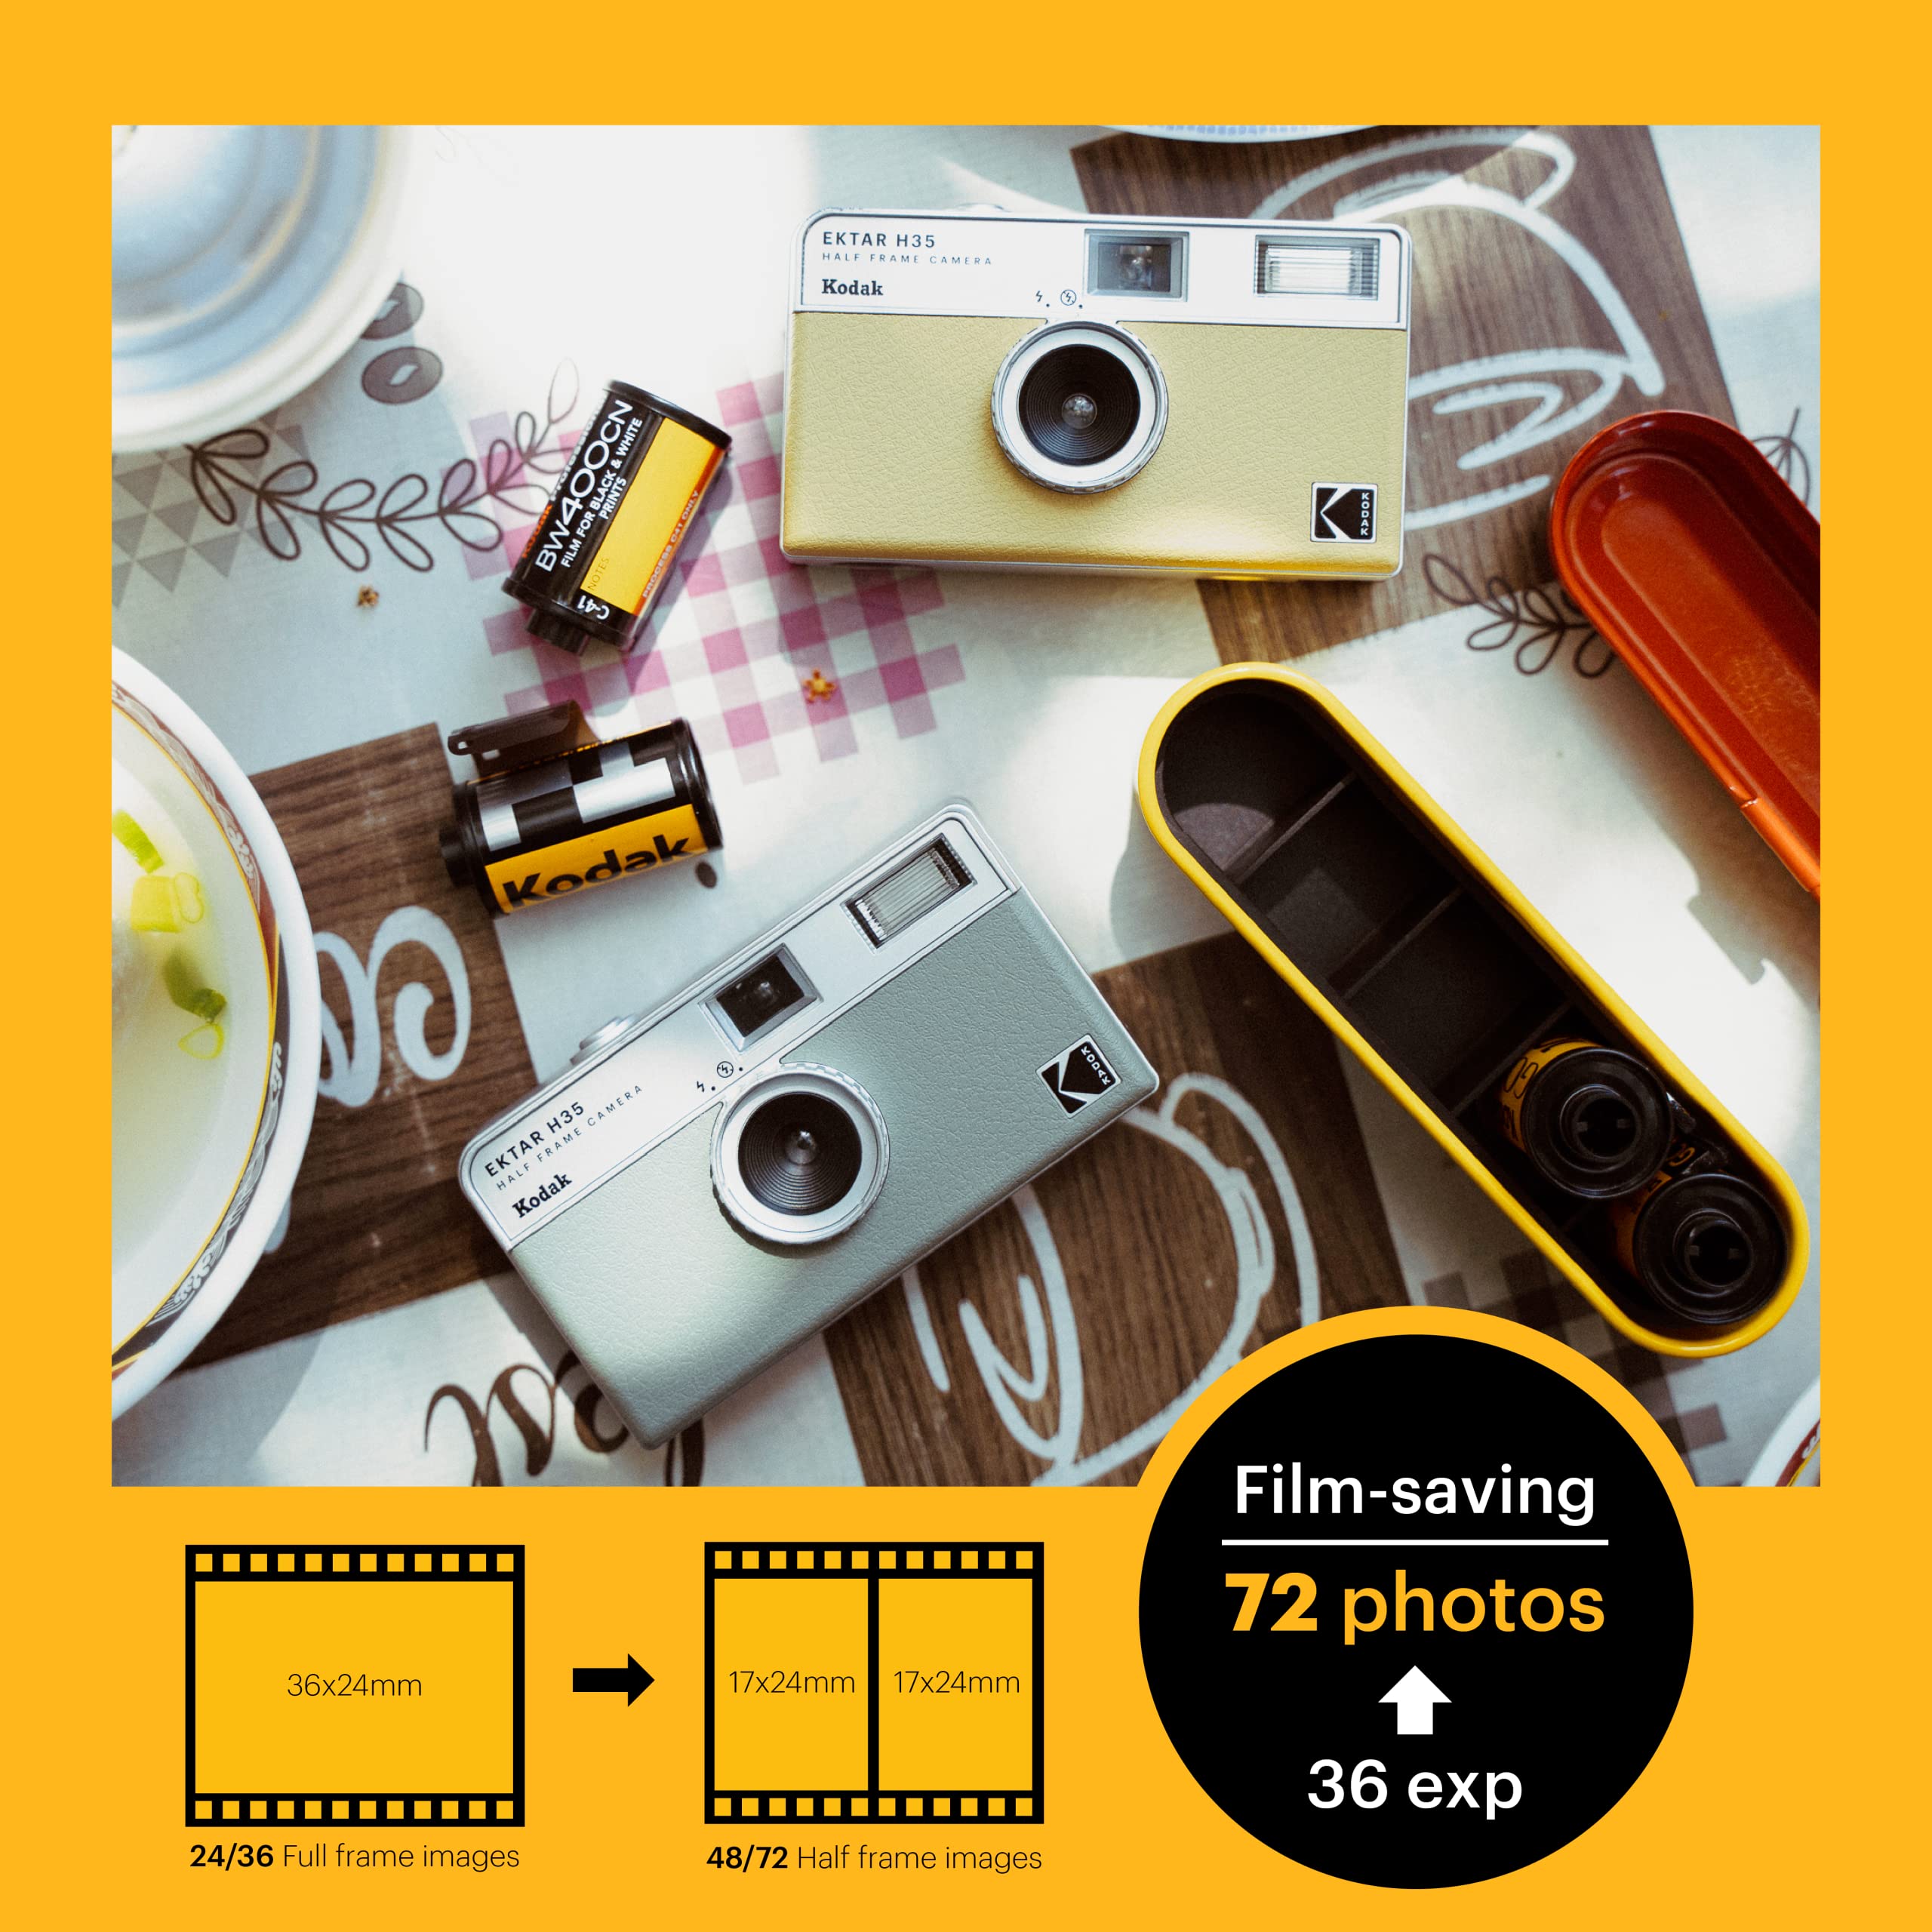 KODAK EKTAR H35 Half Frame Film Camera, 35mm, Reusable, Focus-Free, Lightweight, Easy-to-Use (Sage) (Film & AAA Battery are not Included)